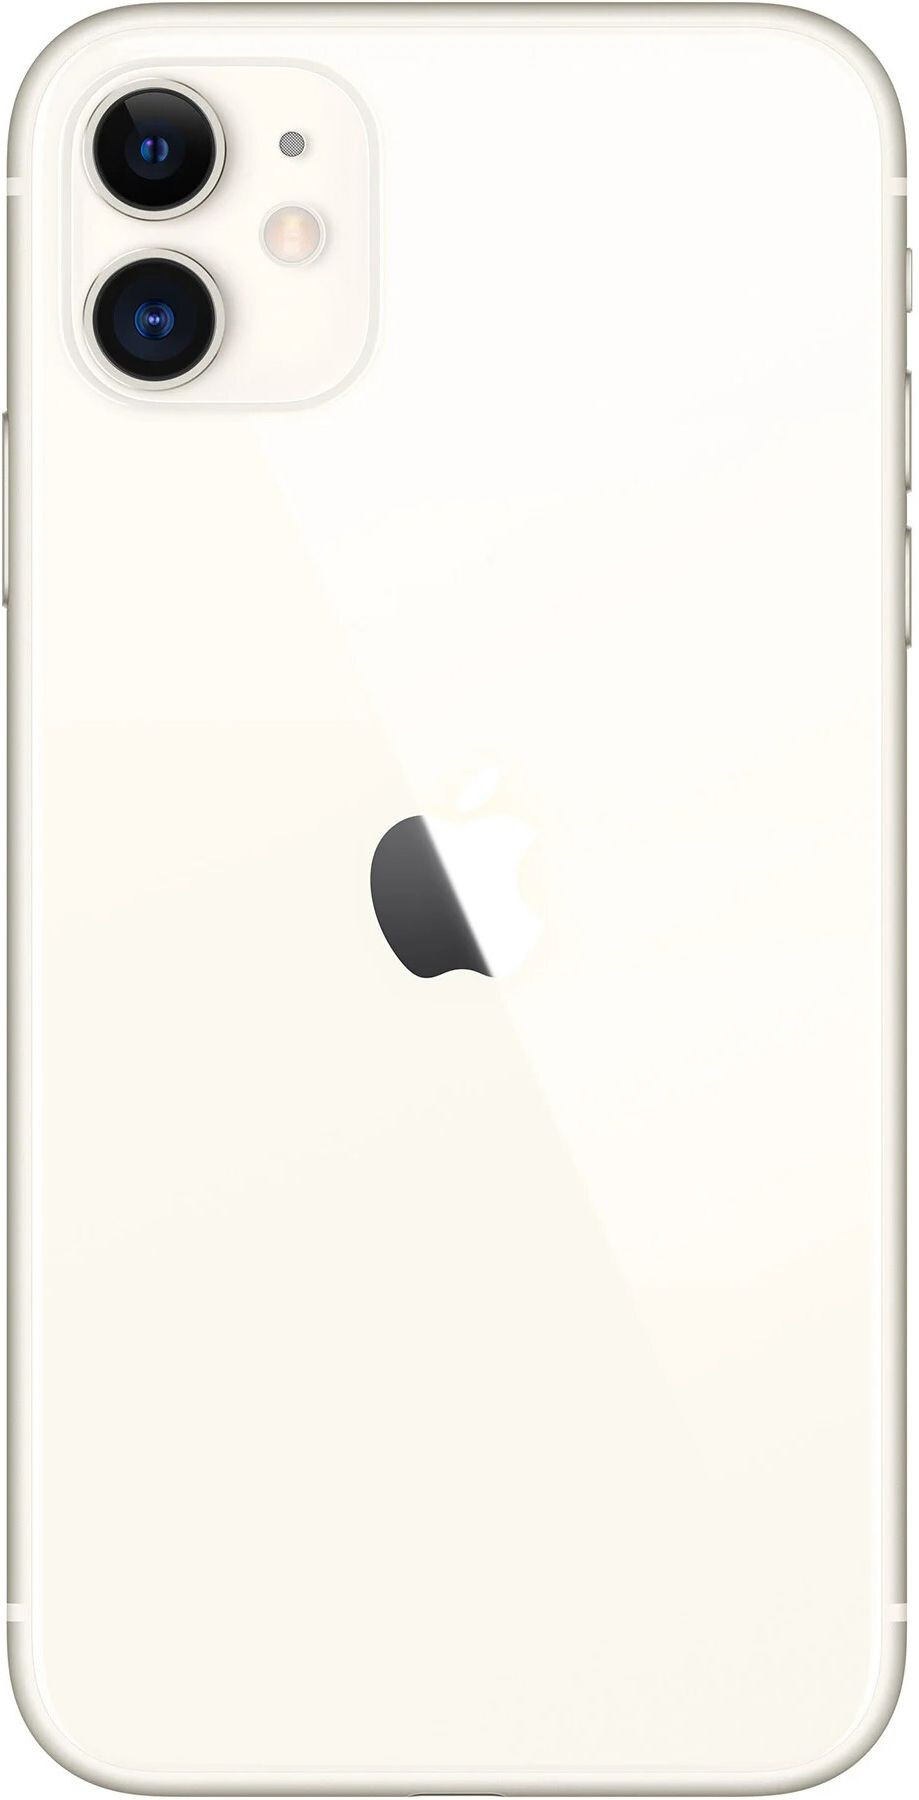  Apple iPhone 11 Dual SIM  128GB White